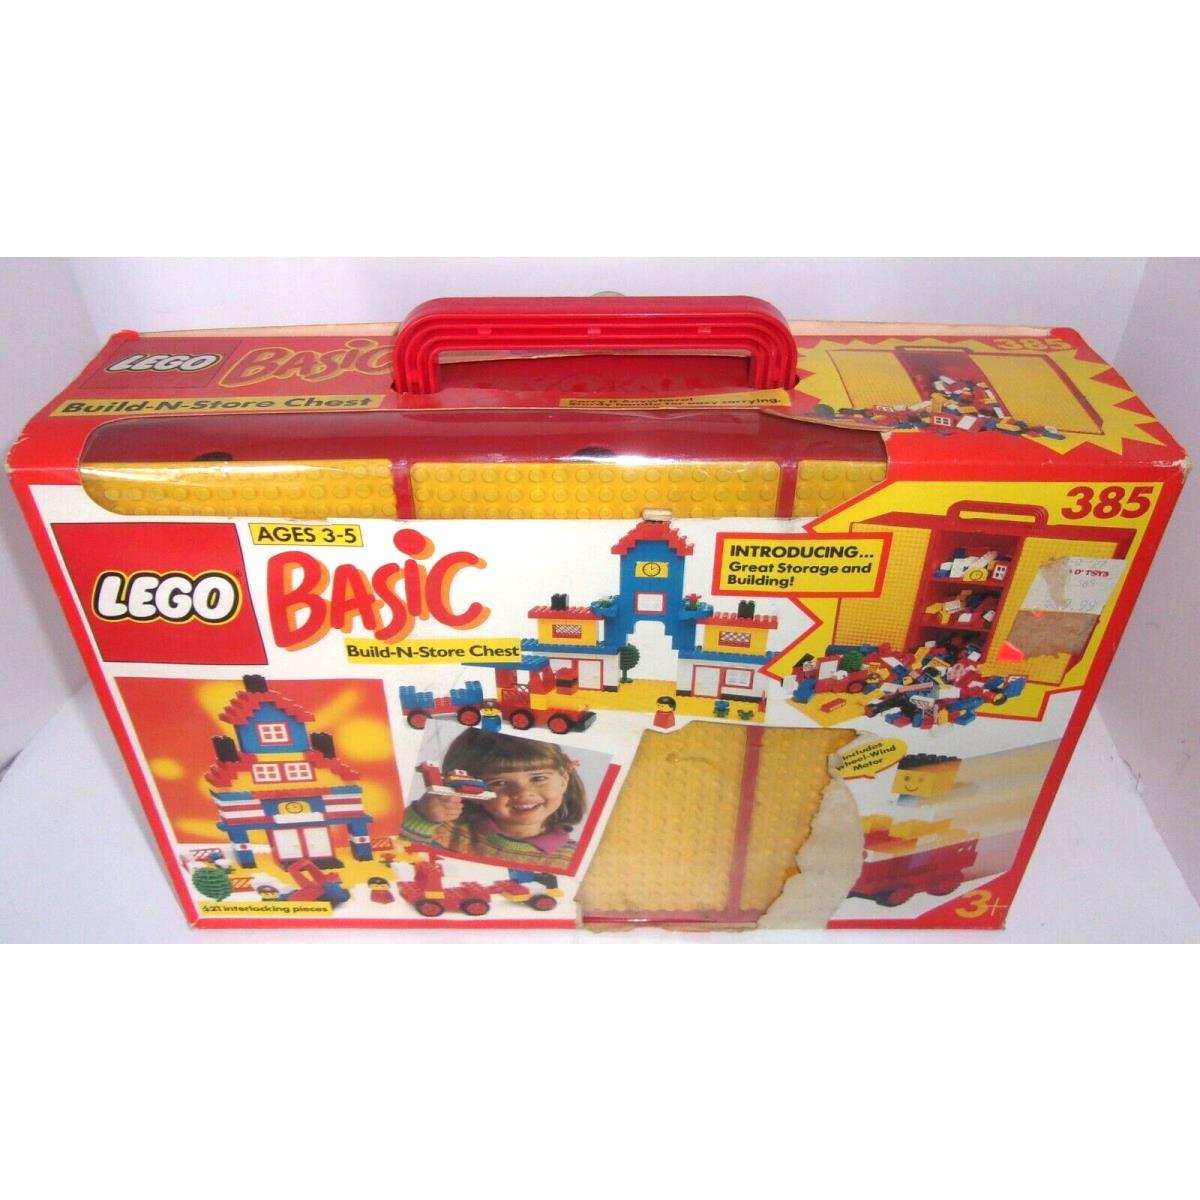 Vintage Basic Lego Set 385 Build-n-store 421 pc Age 3+ 1990 w Storage Box